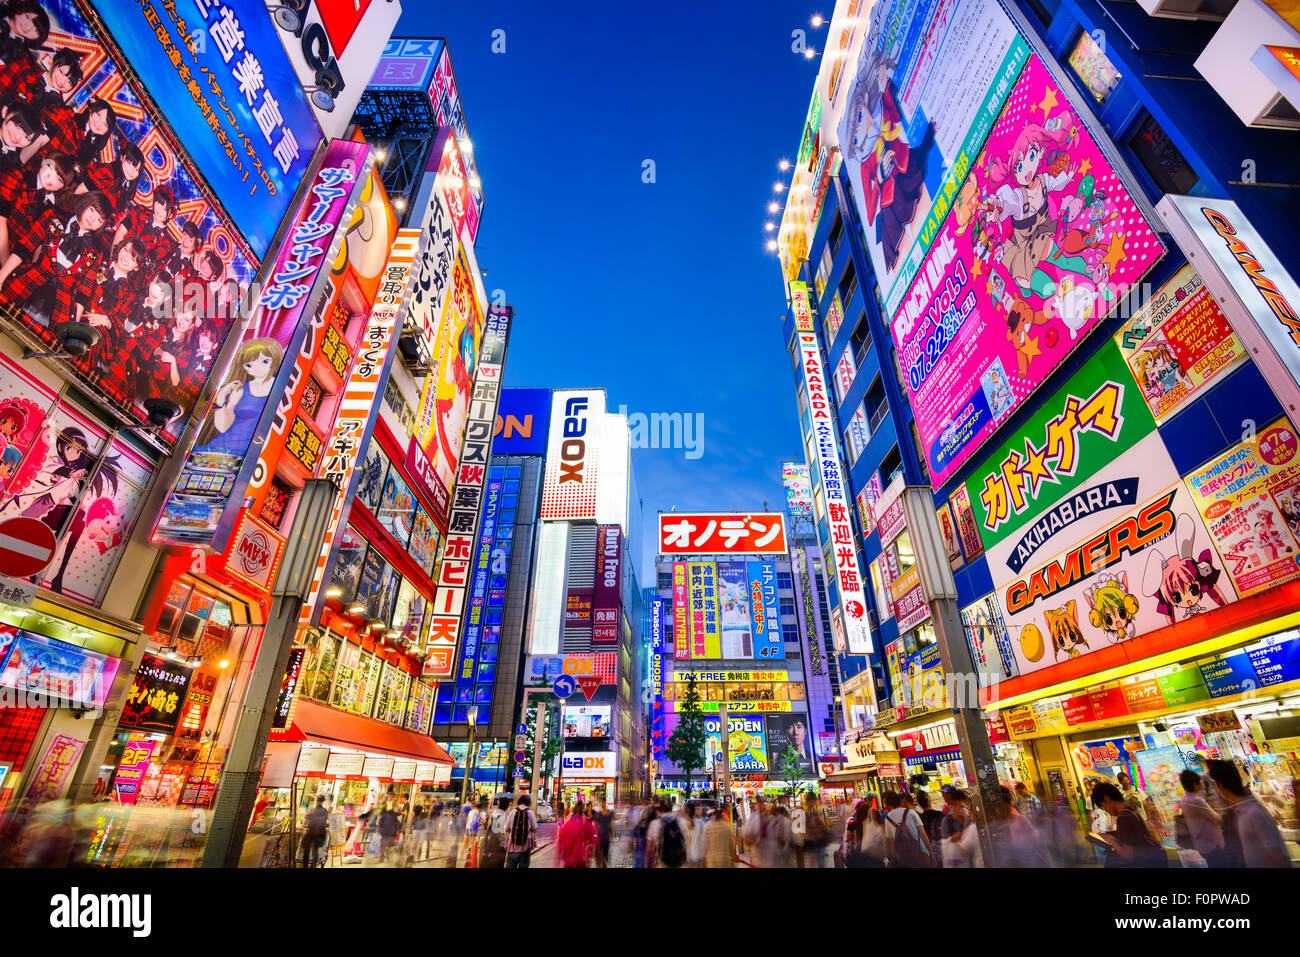 Crowds pass below colorful signs in Akihabara, Tokyo, Japan. Stock Photo